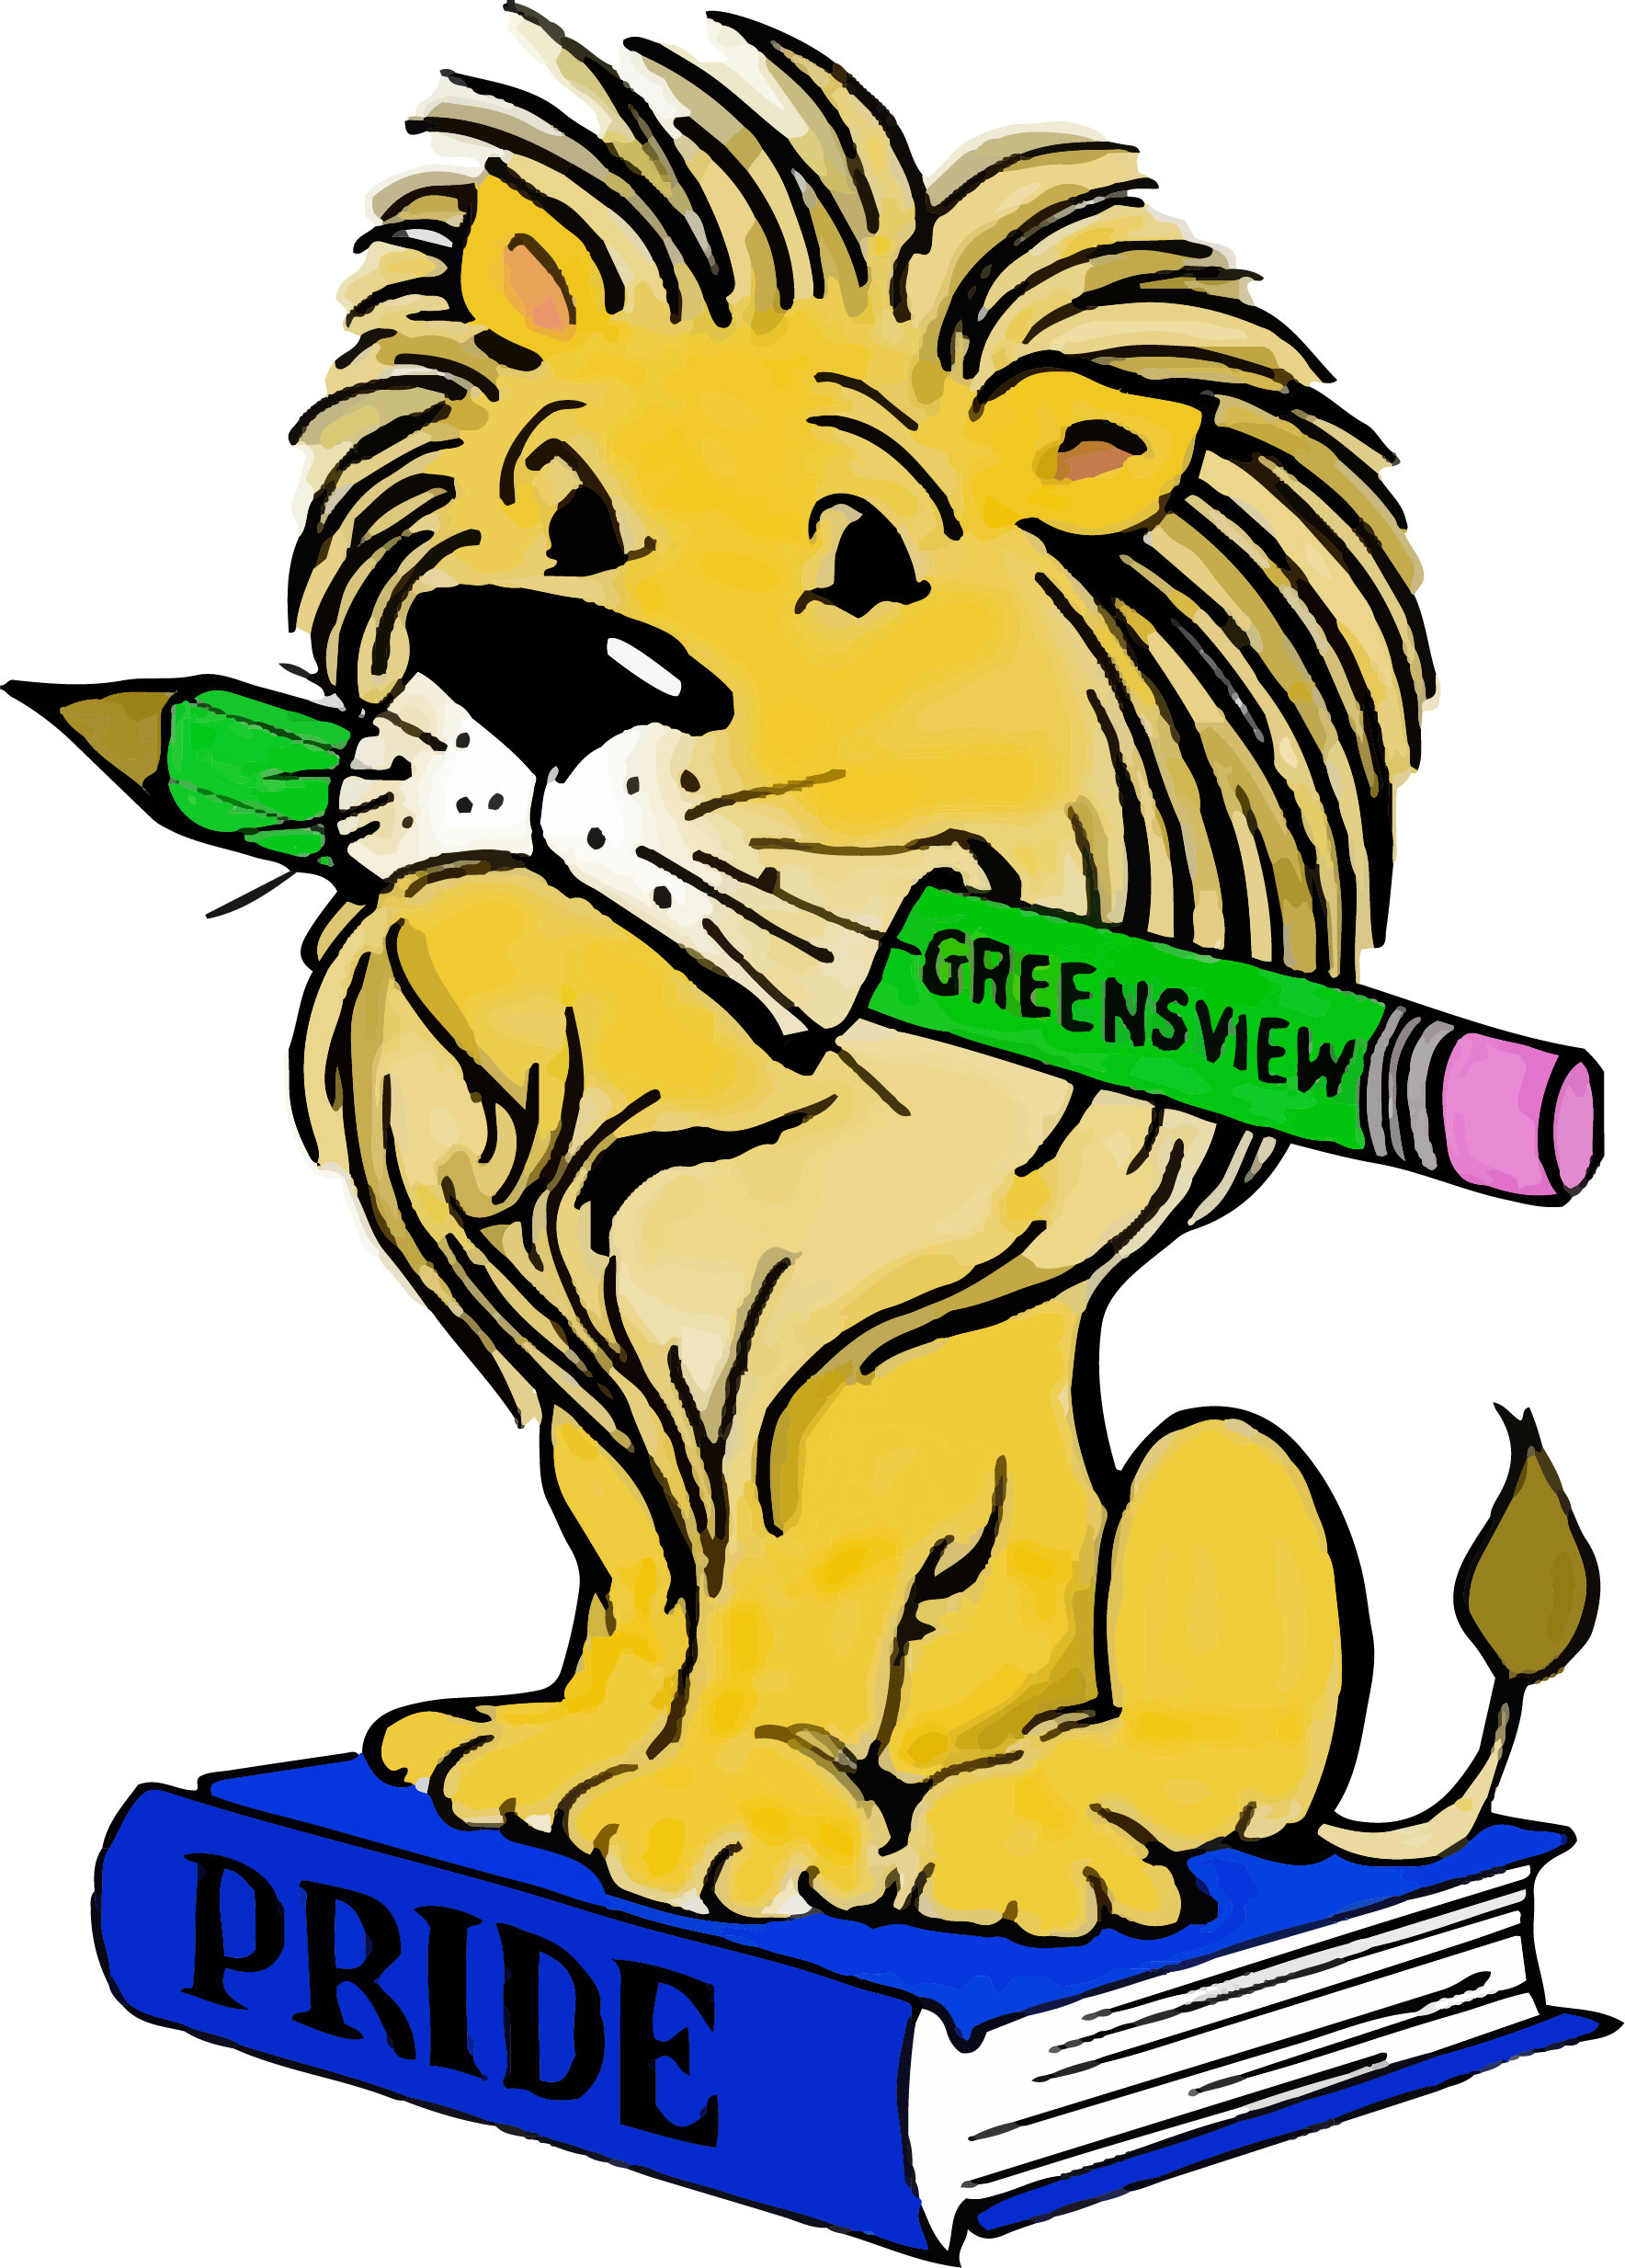 Greensview lion mascot logo